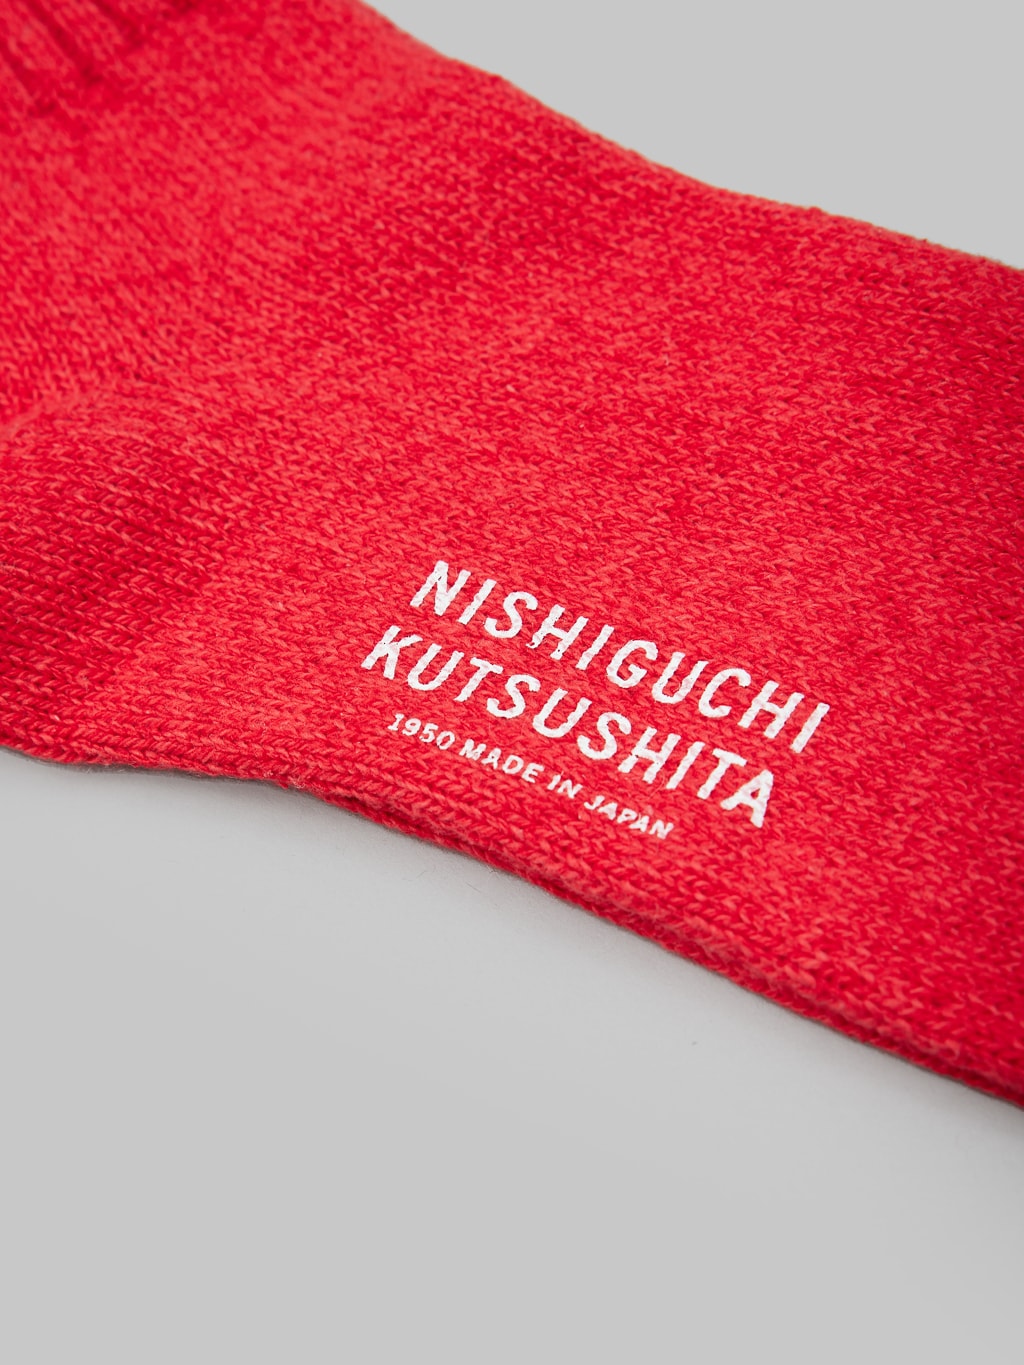 nishiguchi kutsushita silk cotton socks red stamped logo